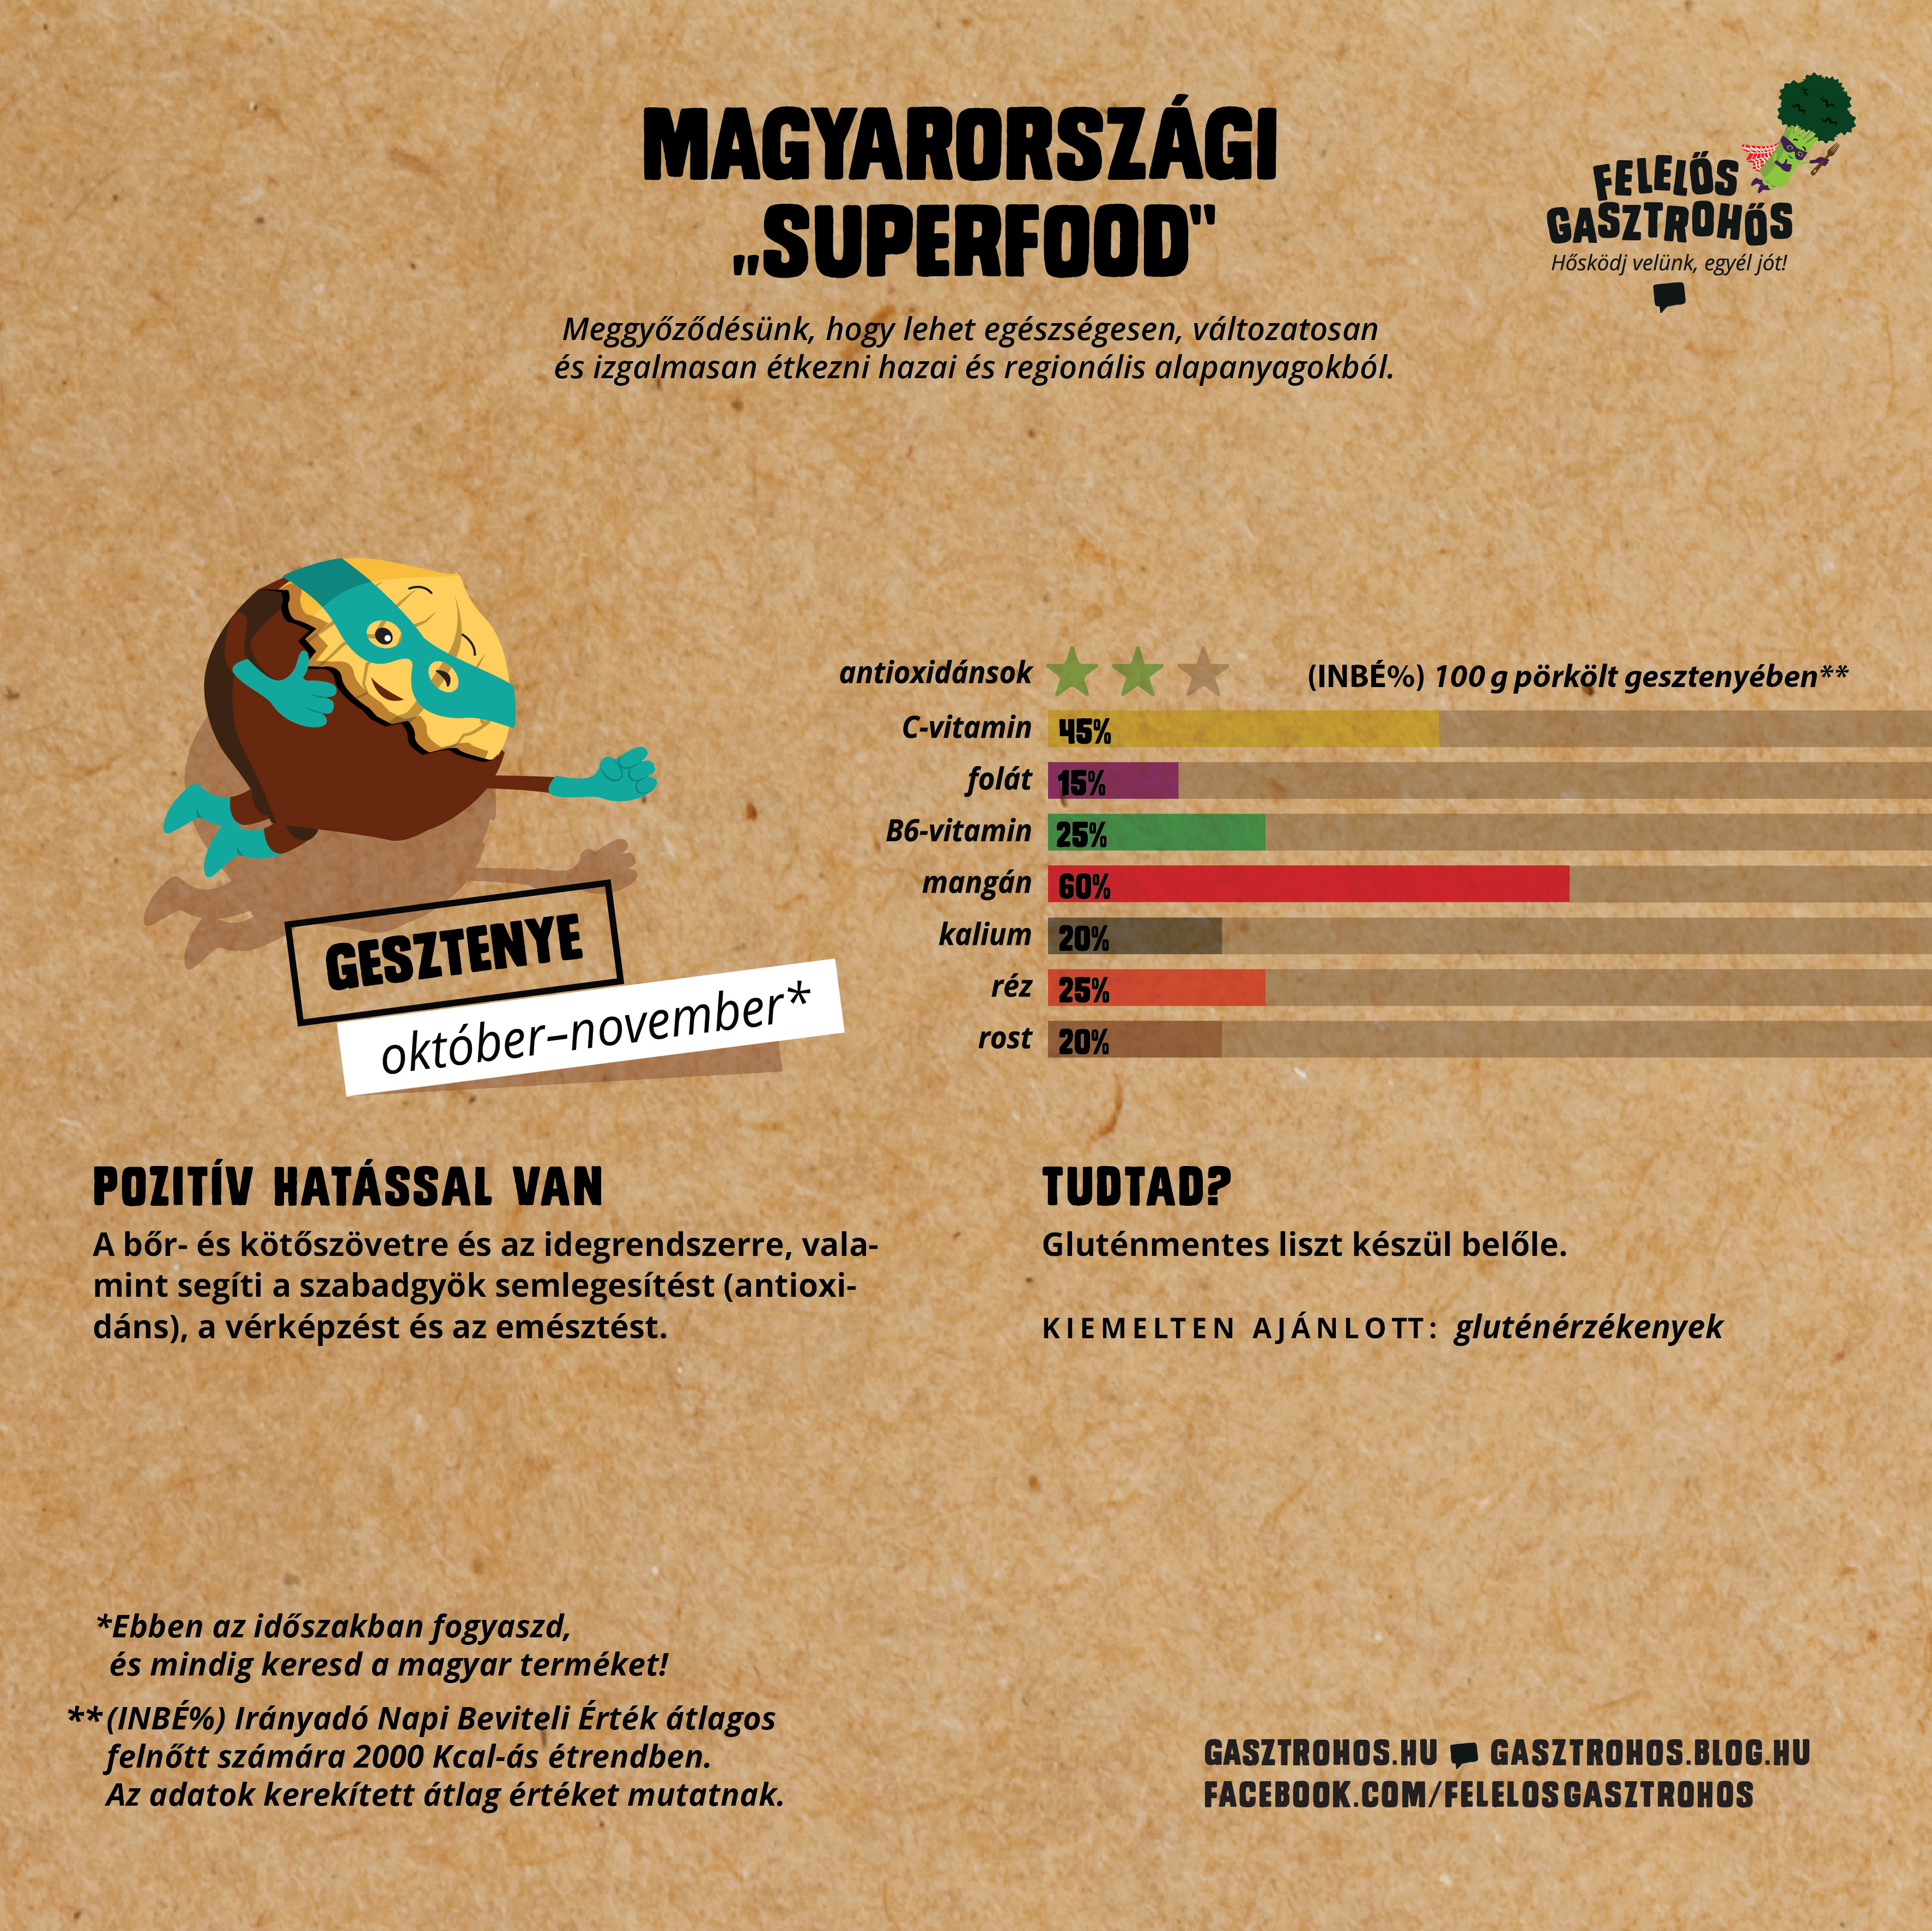 gasztrohos-superfood-terkep-infografika-2017-06-17-blog_2.jpg